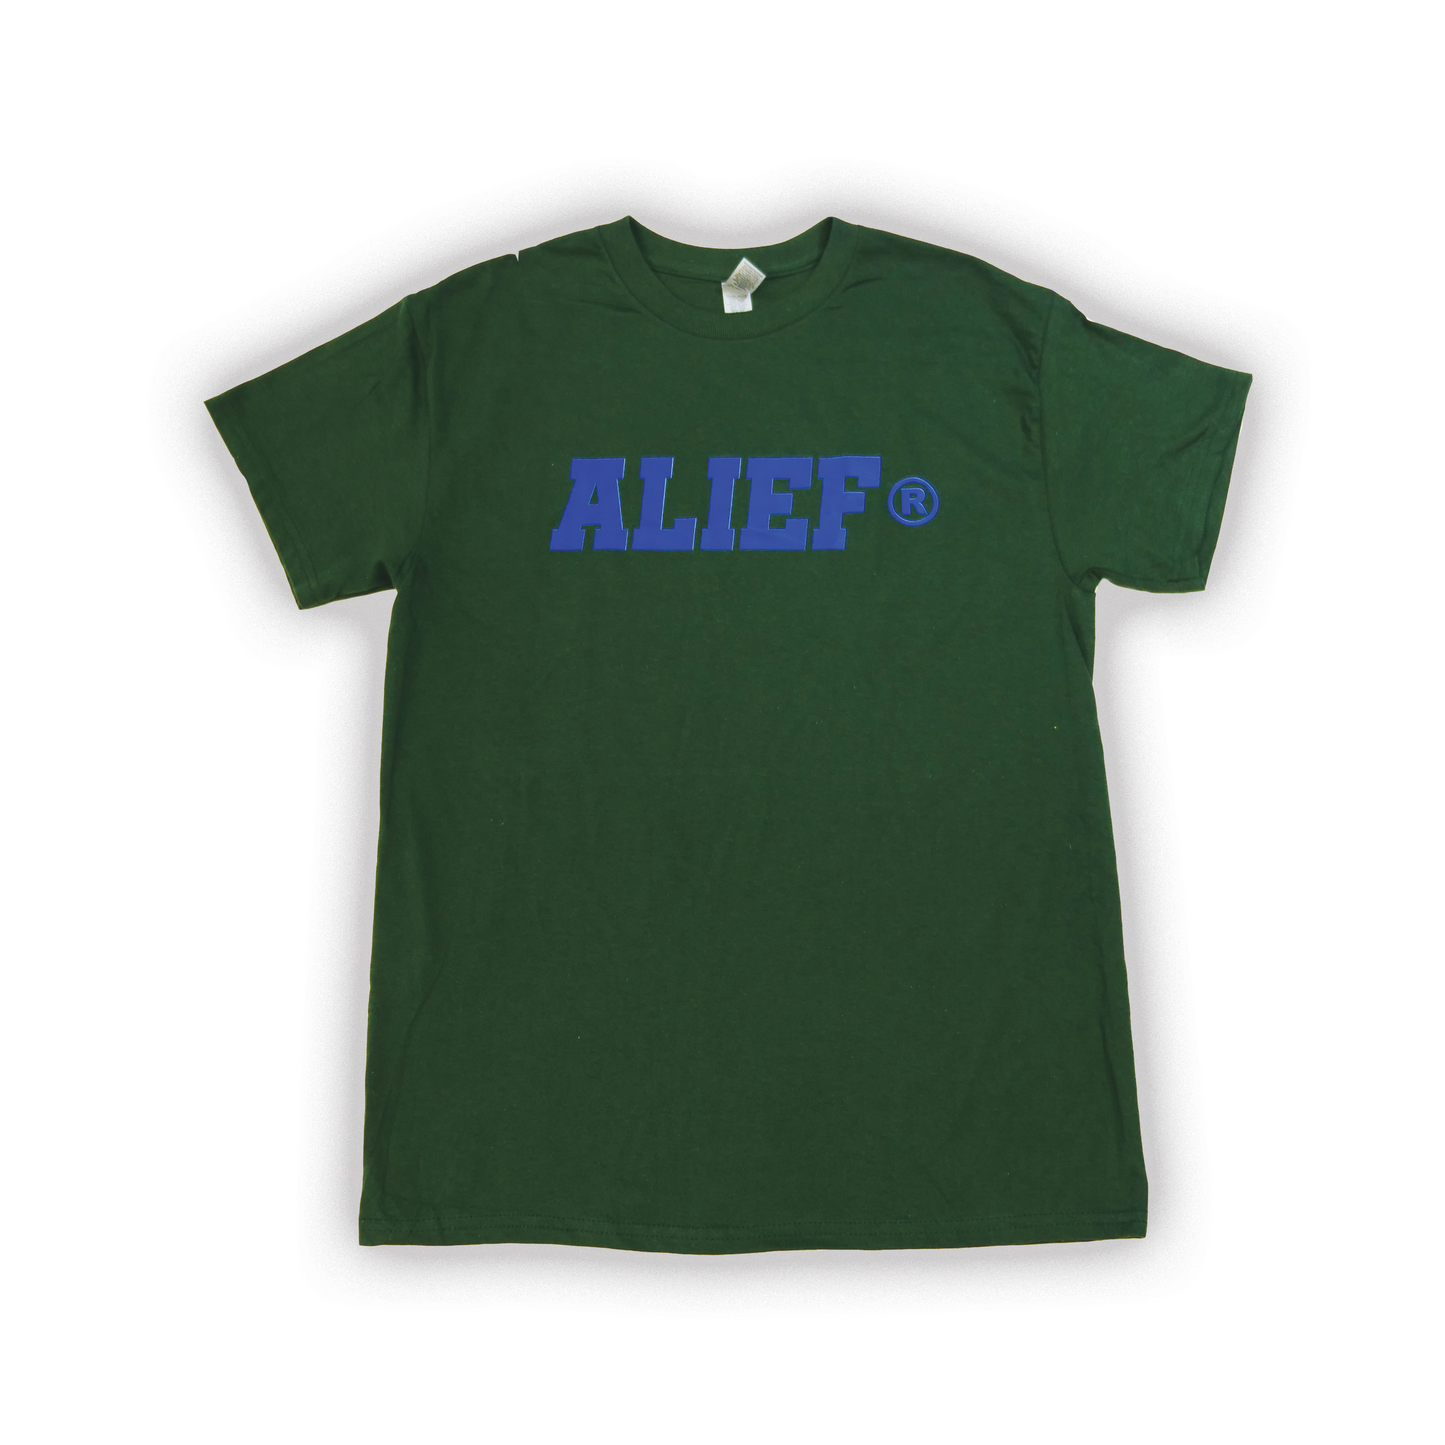 Alief 2.0 Academy Shirt